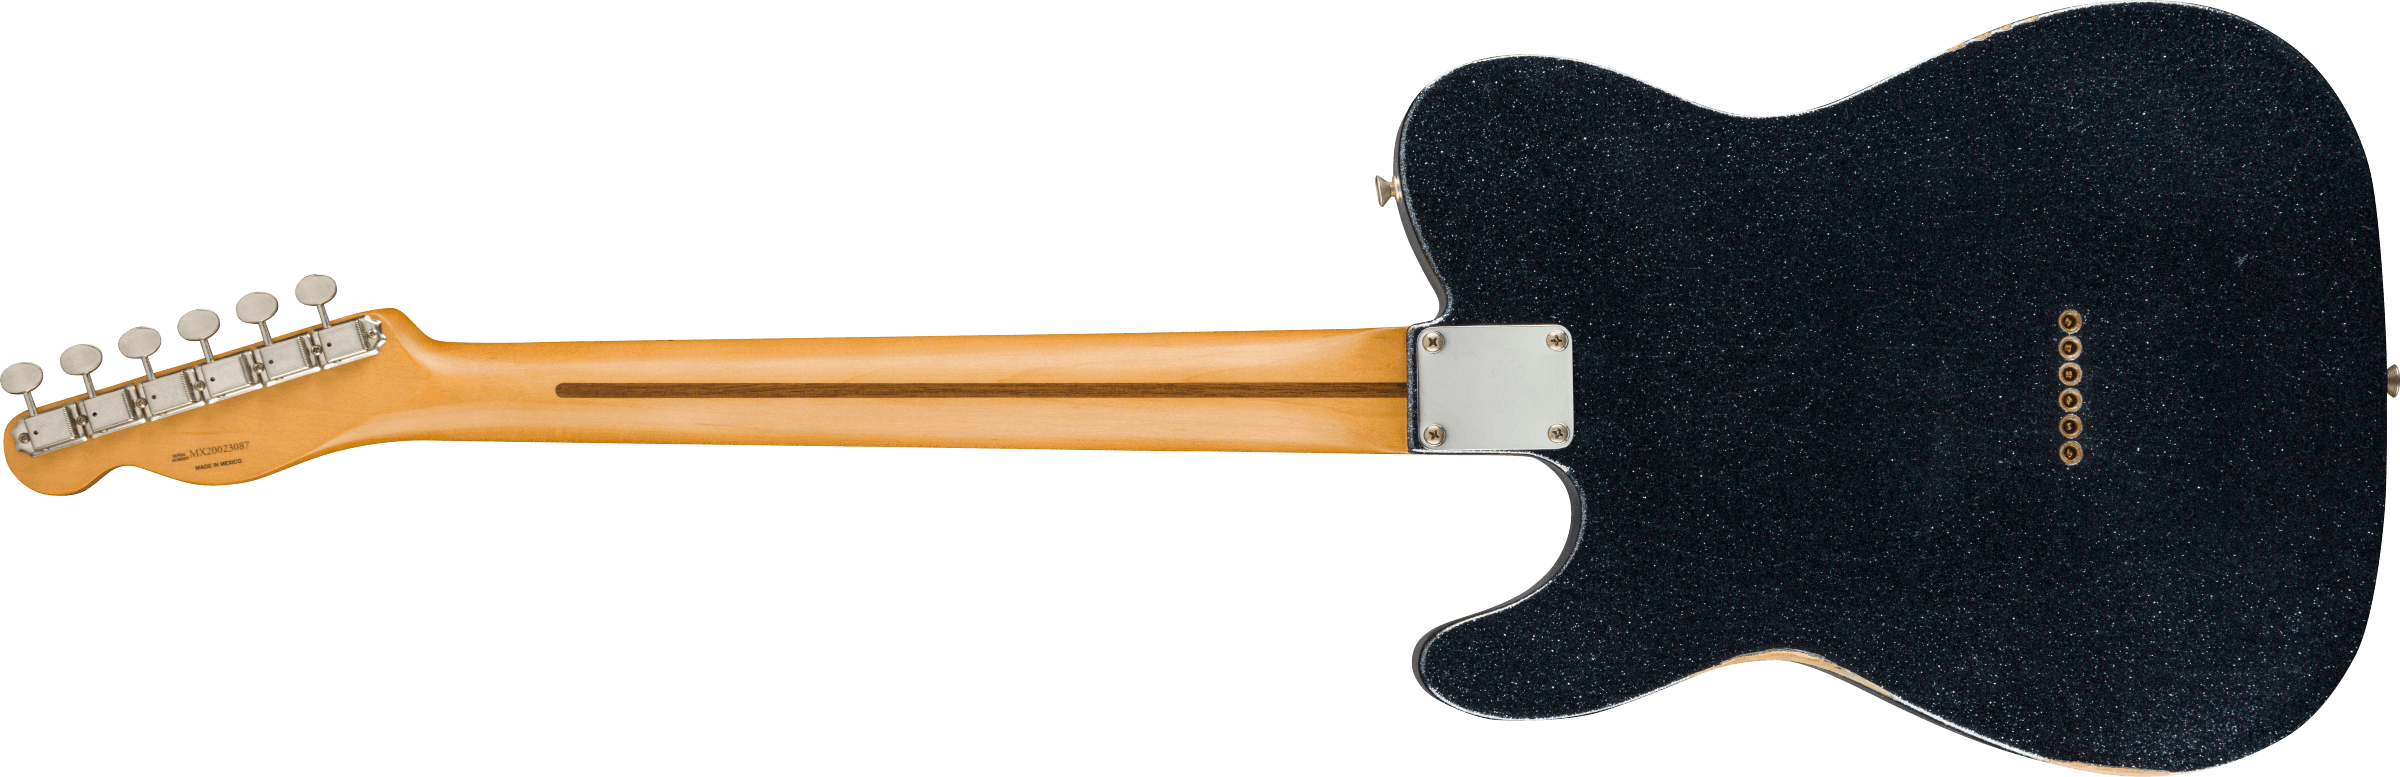 Fender Brad Paisley Esquire®, Maple, Black Sparkle